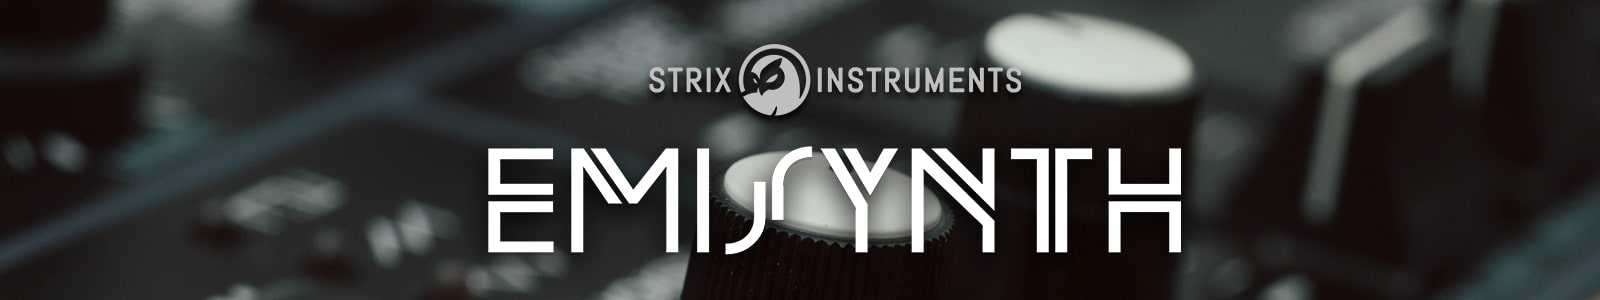 emisynth by strix instruments